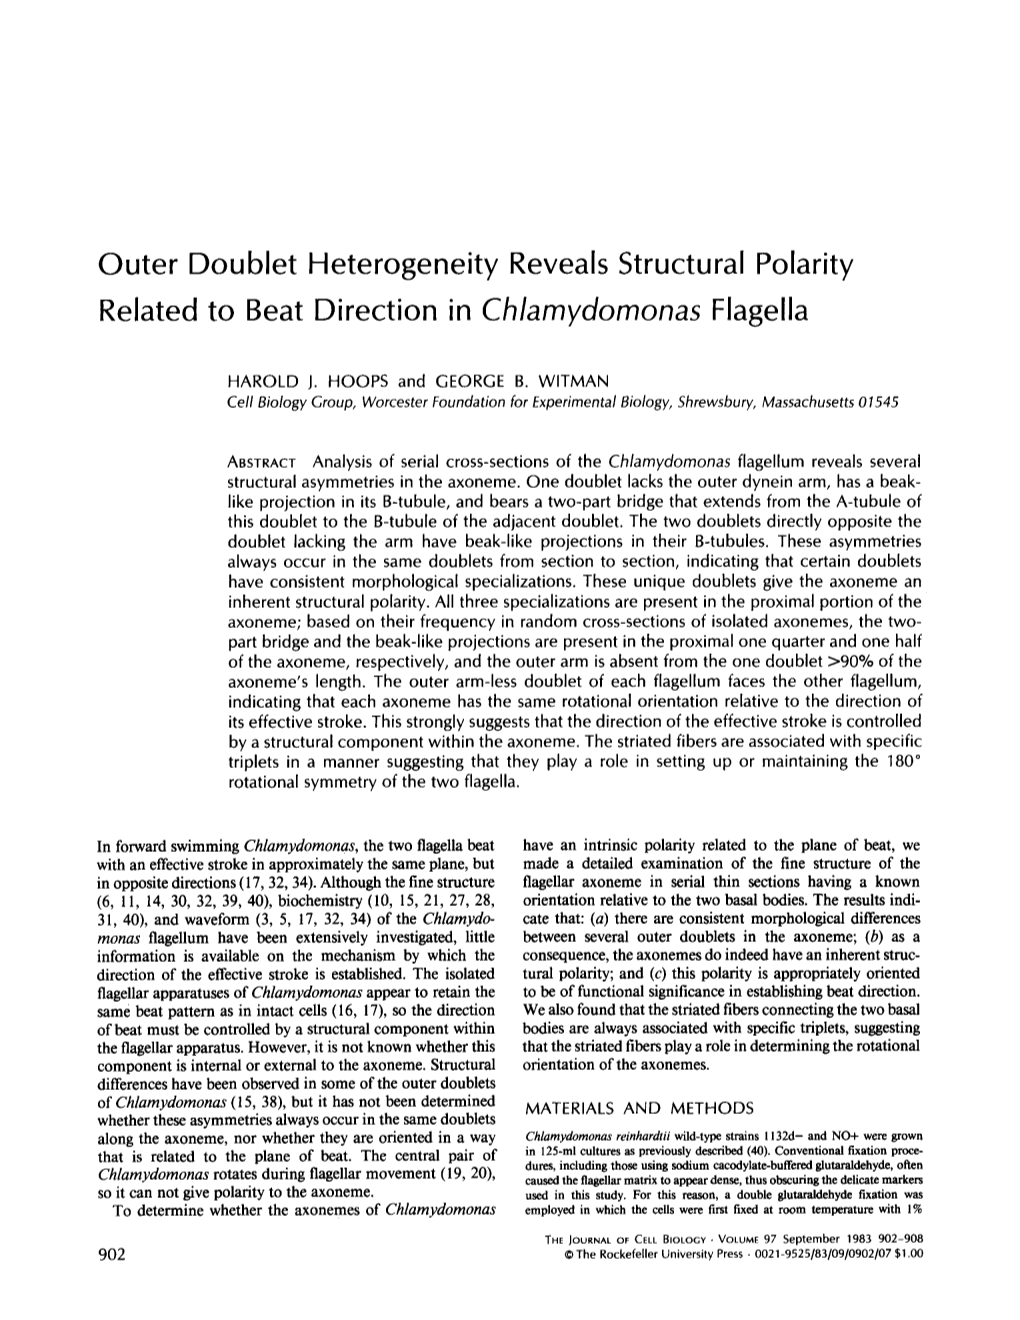 Direction in Chlamydomonas Flagella